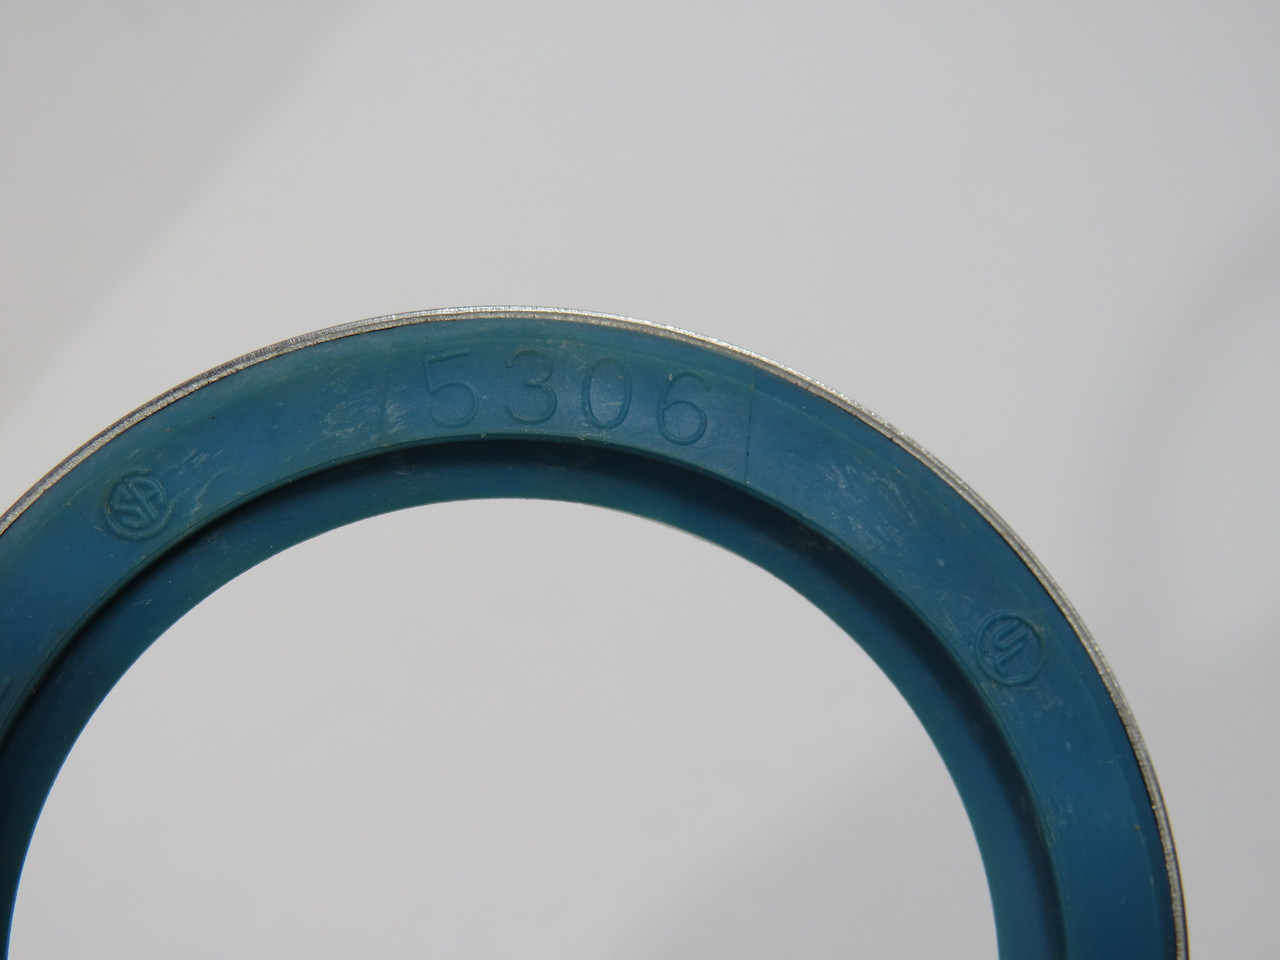 Thomas & Betts 5306 Sealing Ring 1-1/2" 12-Pack NEW